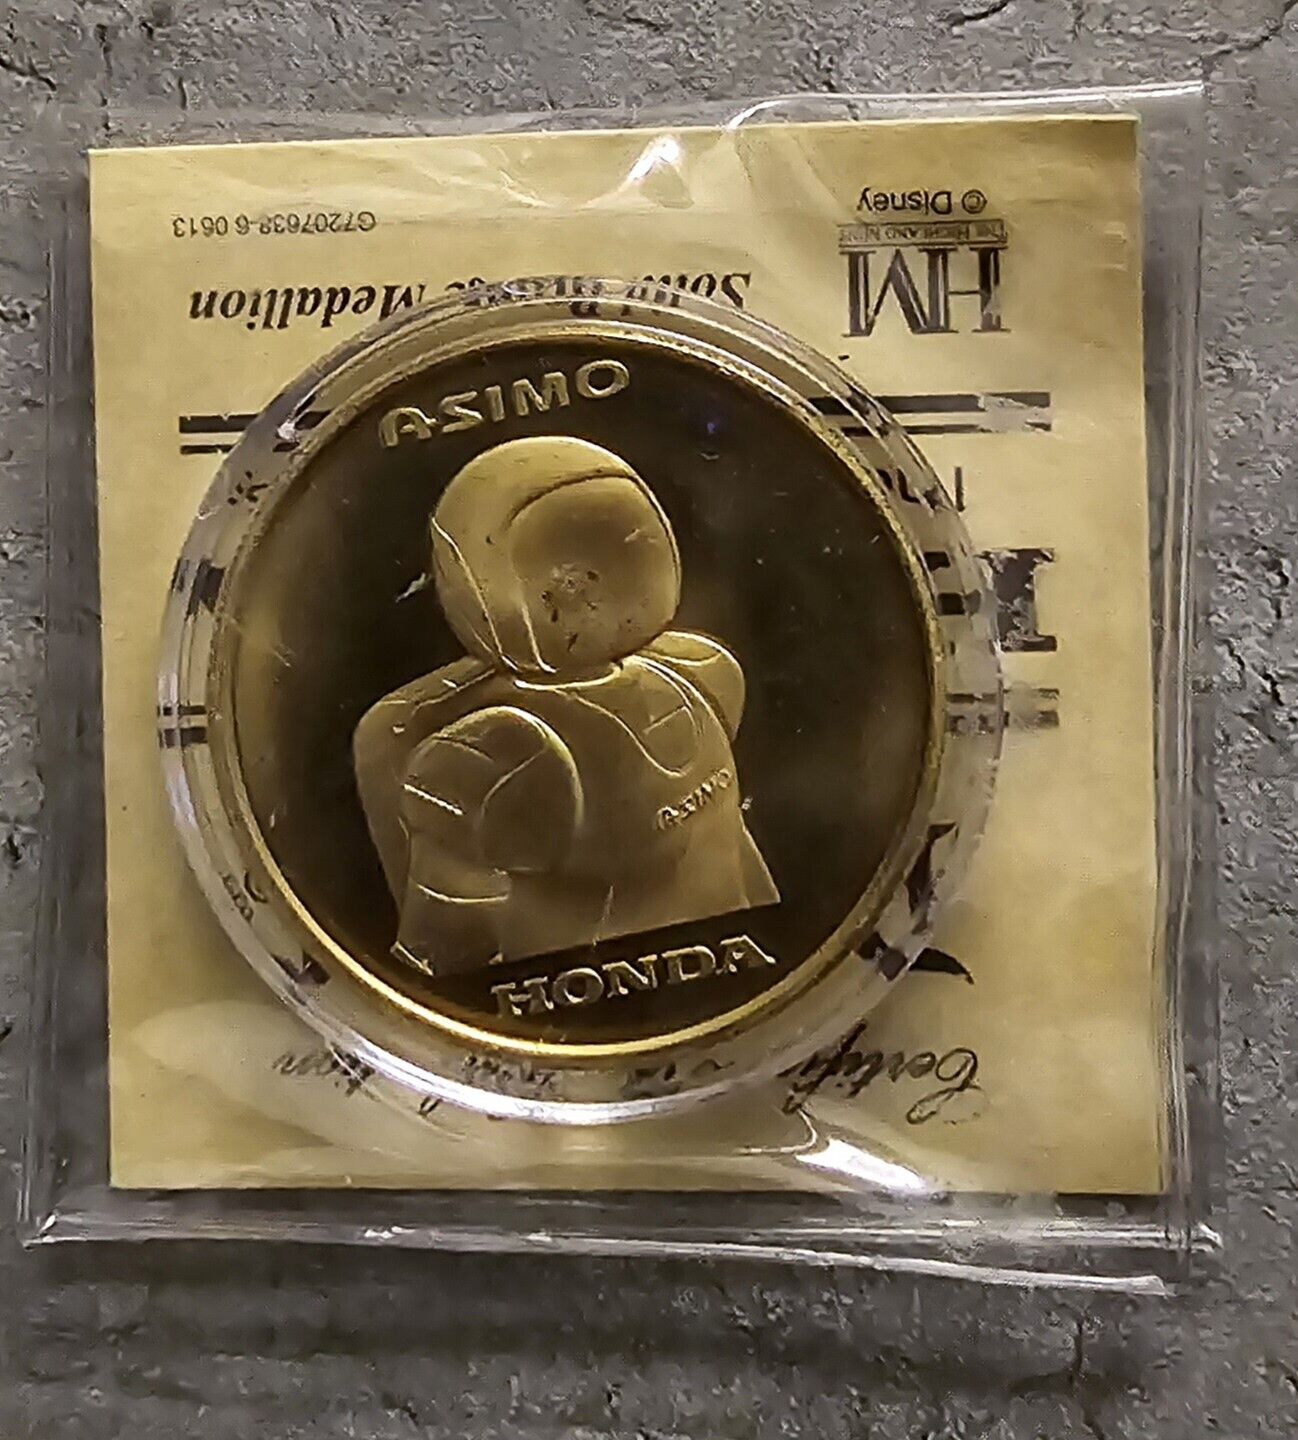 Disneyland Innoventions Honda Asimo Robot Solid Bronze Medallion Coin Innovation